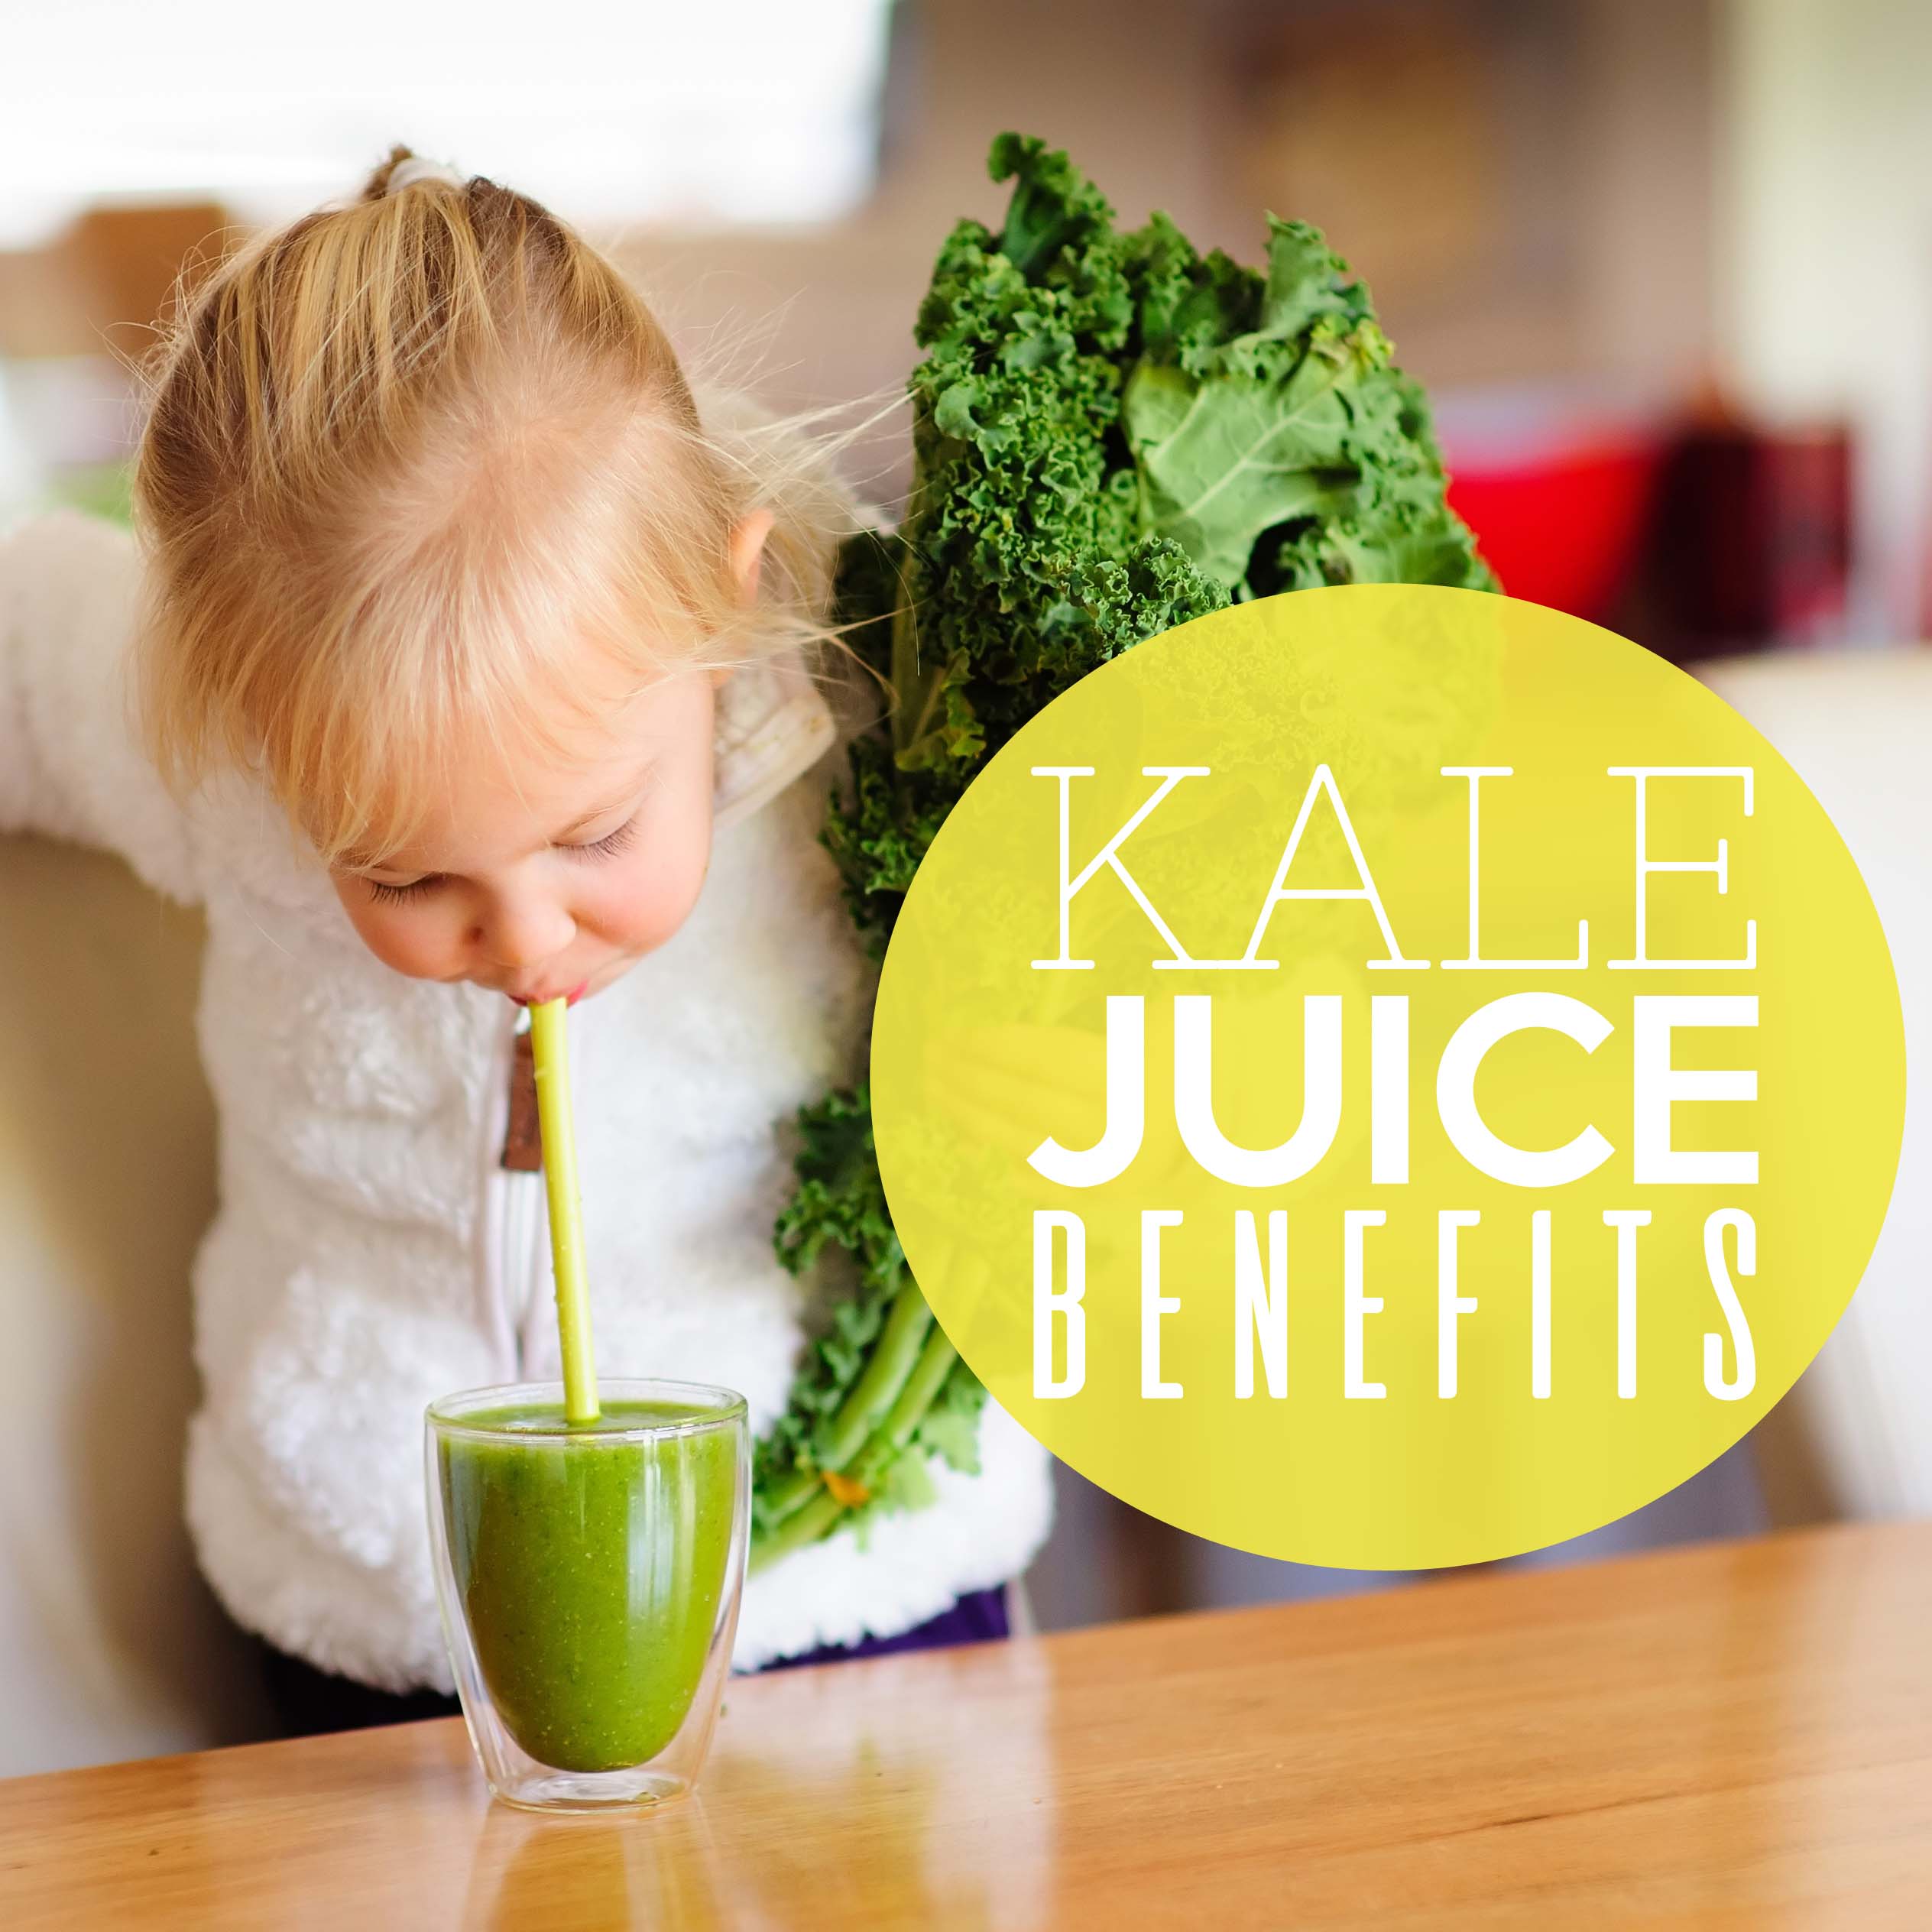 Know About Kale Juice